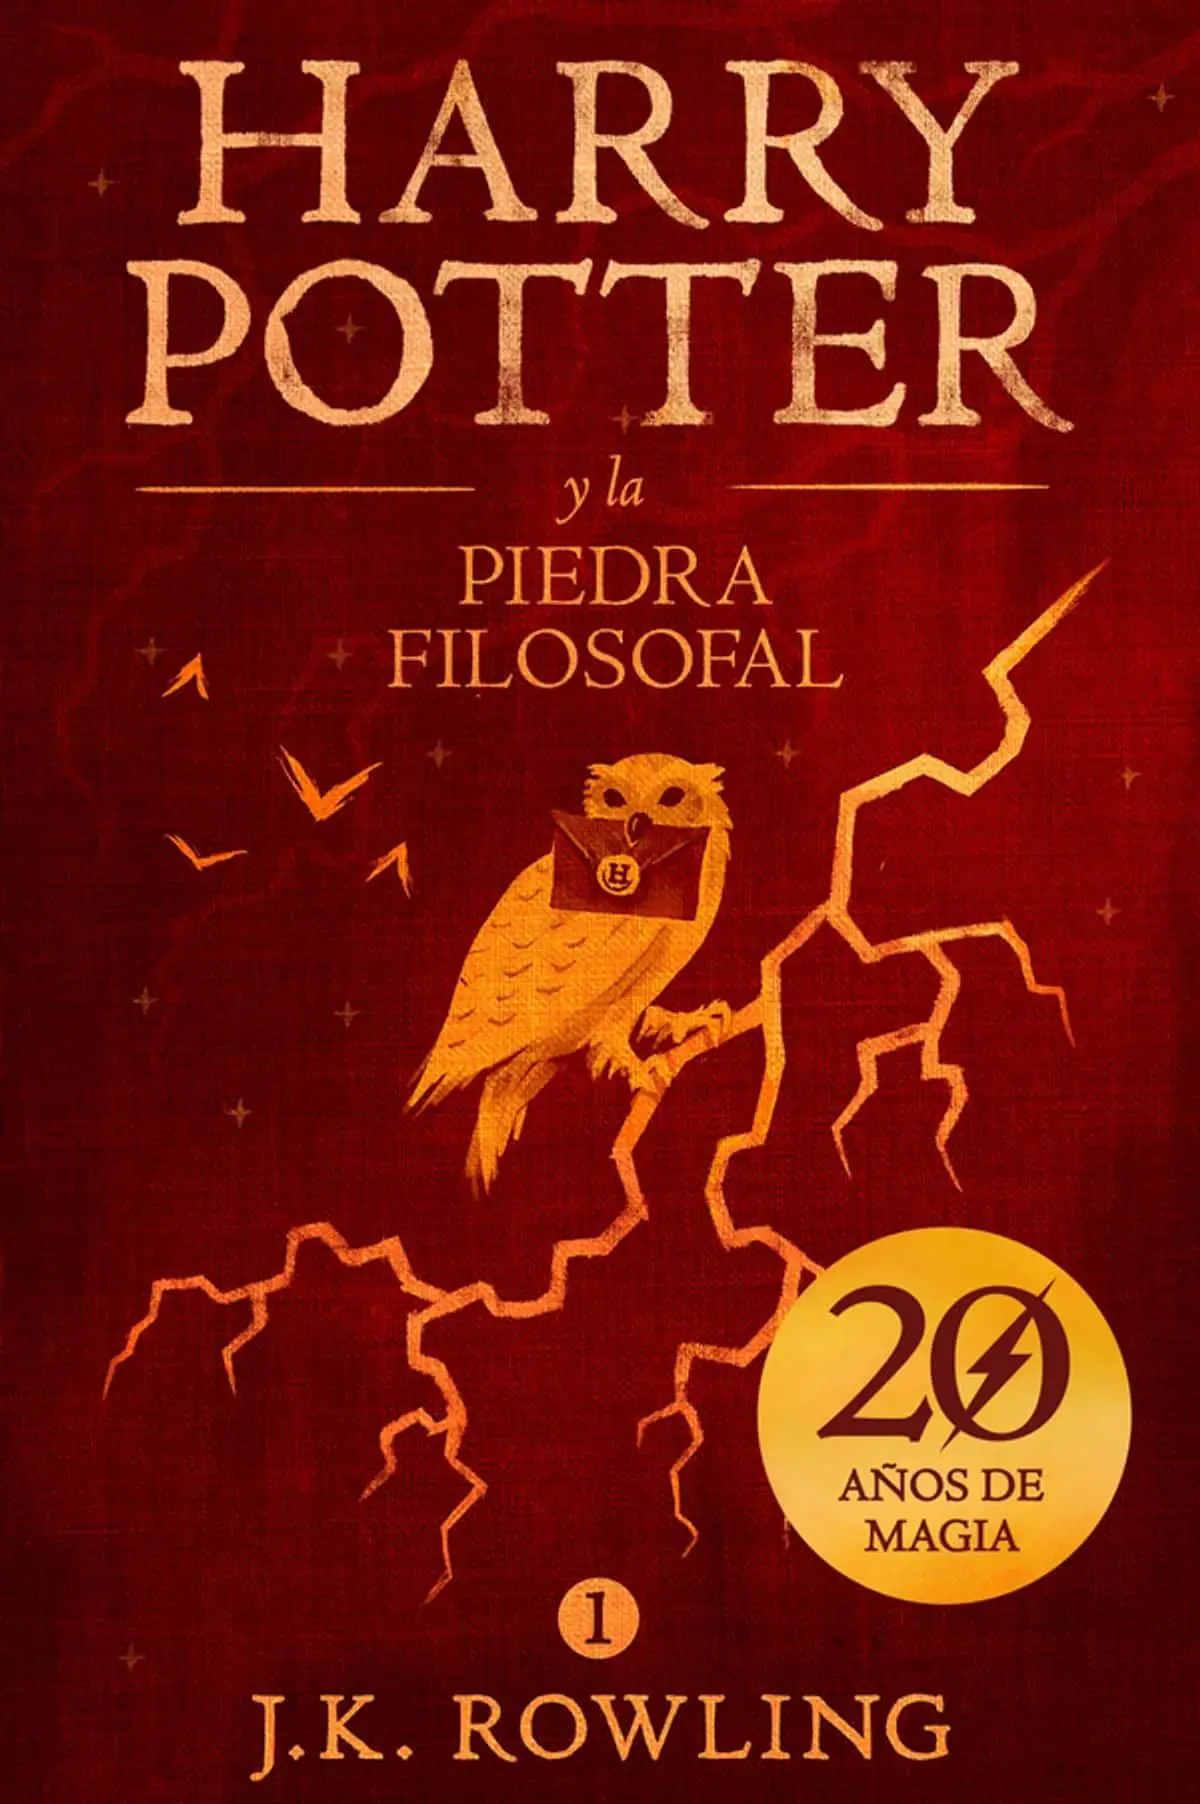 Harry Potter Series | Bestselling Amazon Kindle Books Of 2018